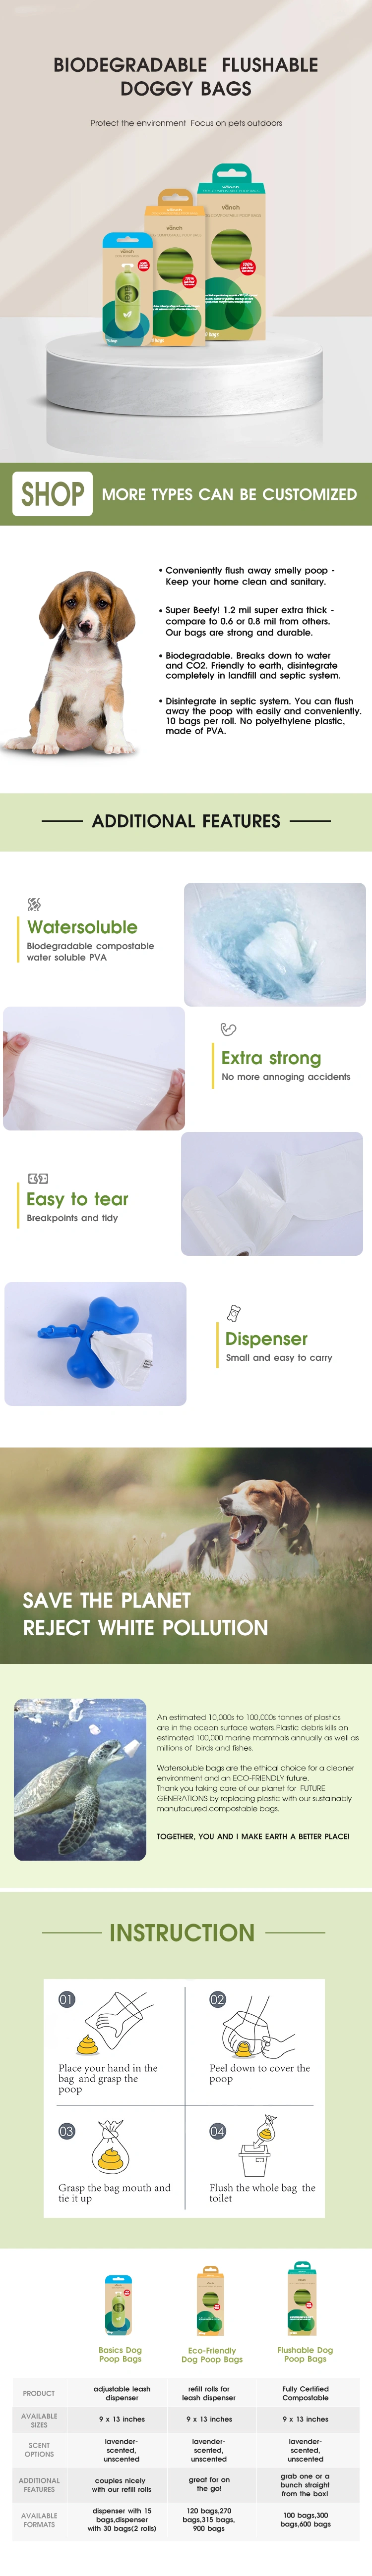 biodegradable flushable poop bags